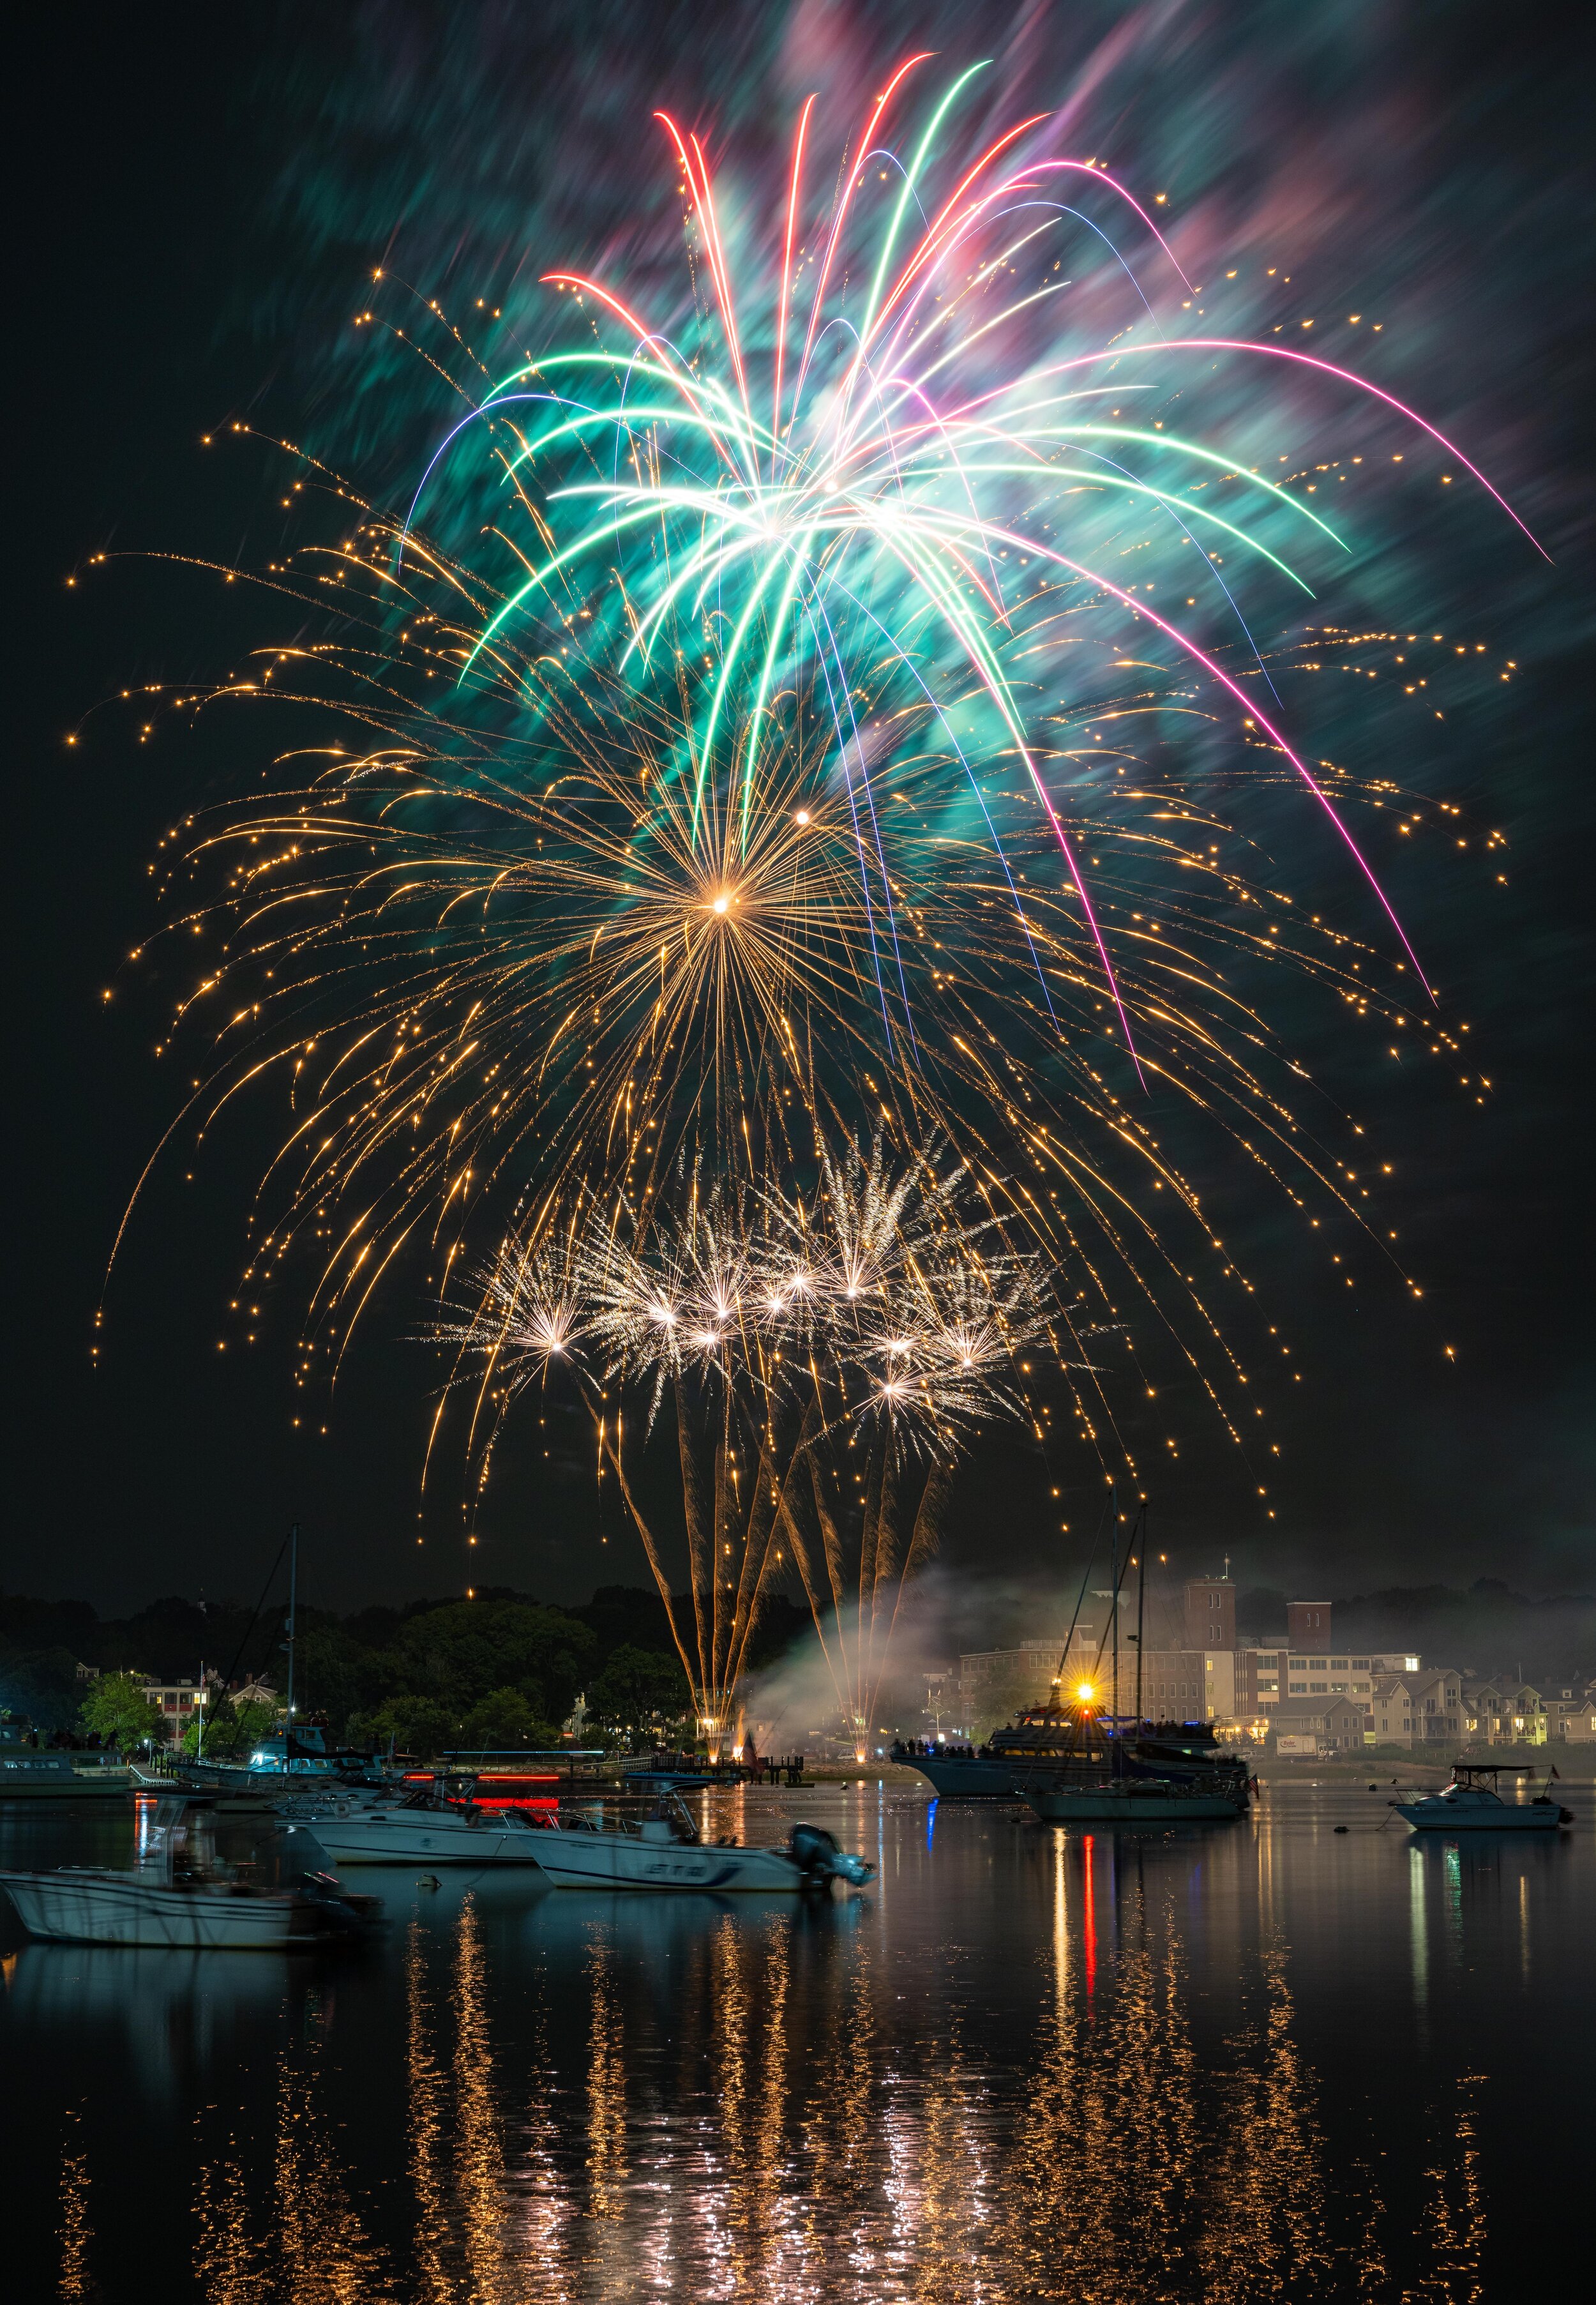 Fireworks light up the sky over Newburyport! — 617 IMAGES BOSTON